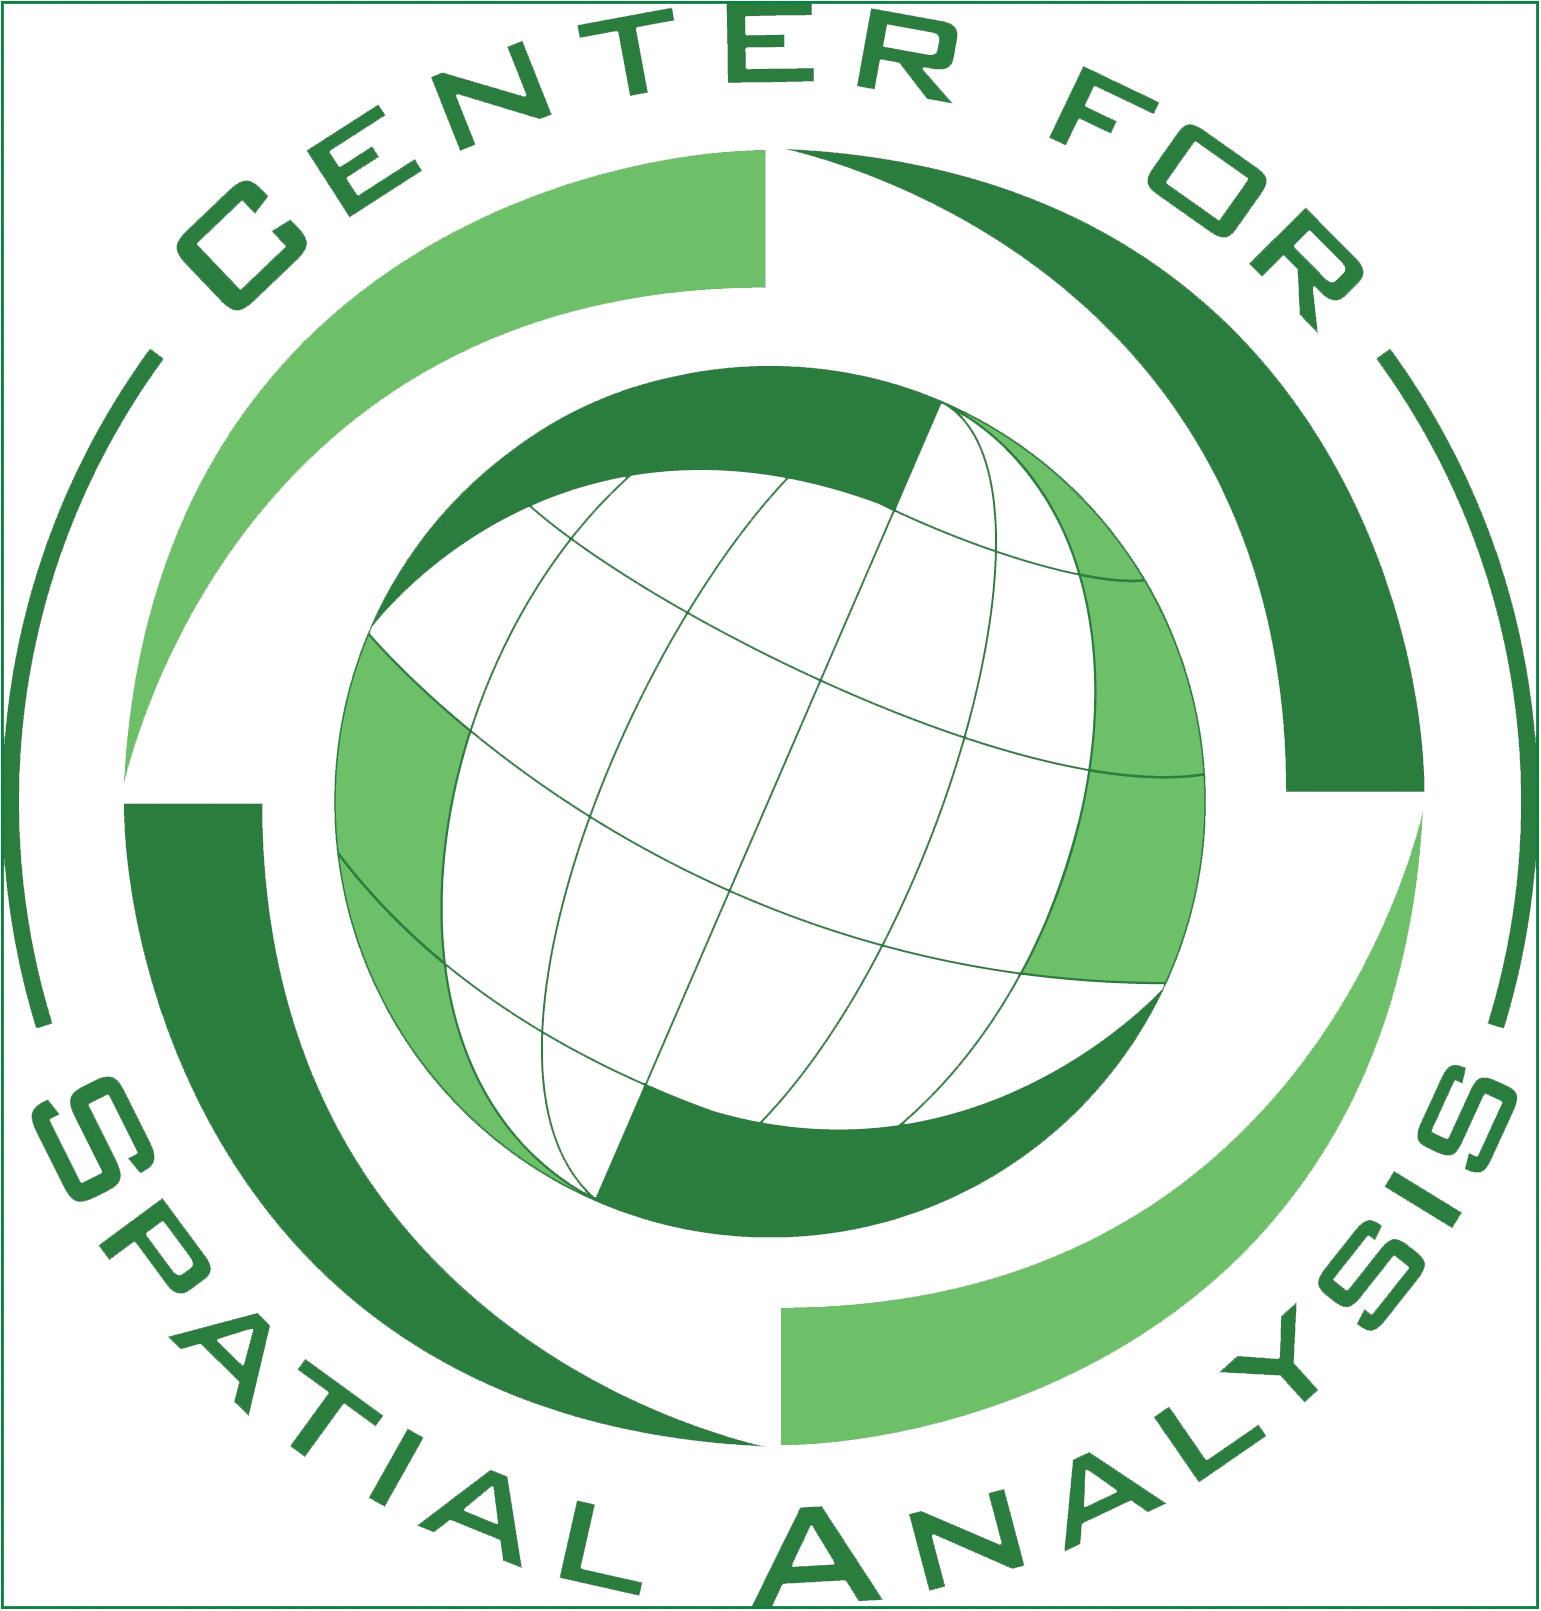 Center for spatial analysis logo.